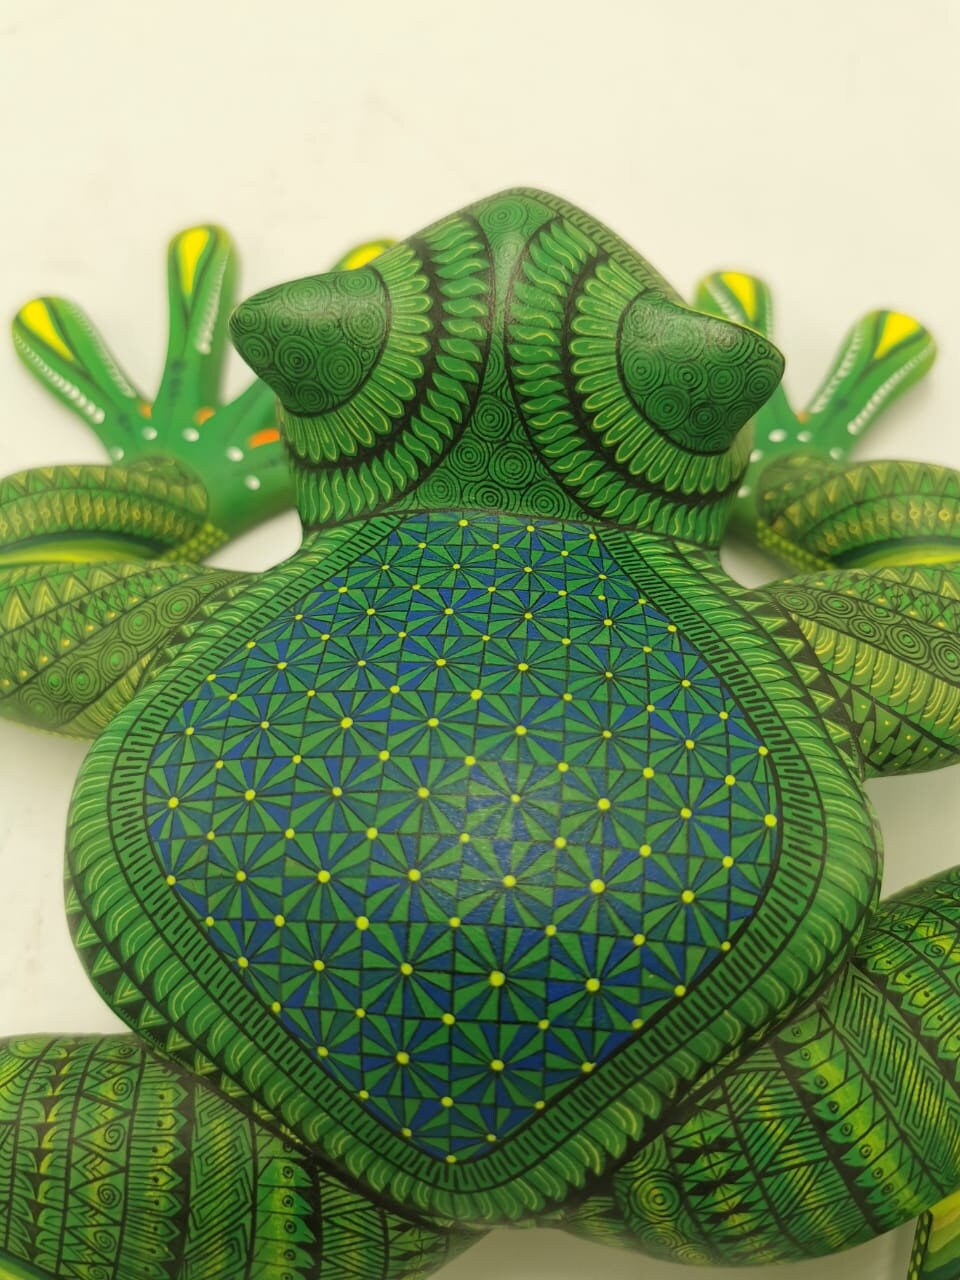 Oaxacan Wood Carving Frog by Manuel Cruz Prudencio PP3991